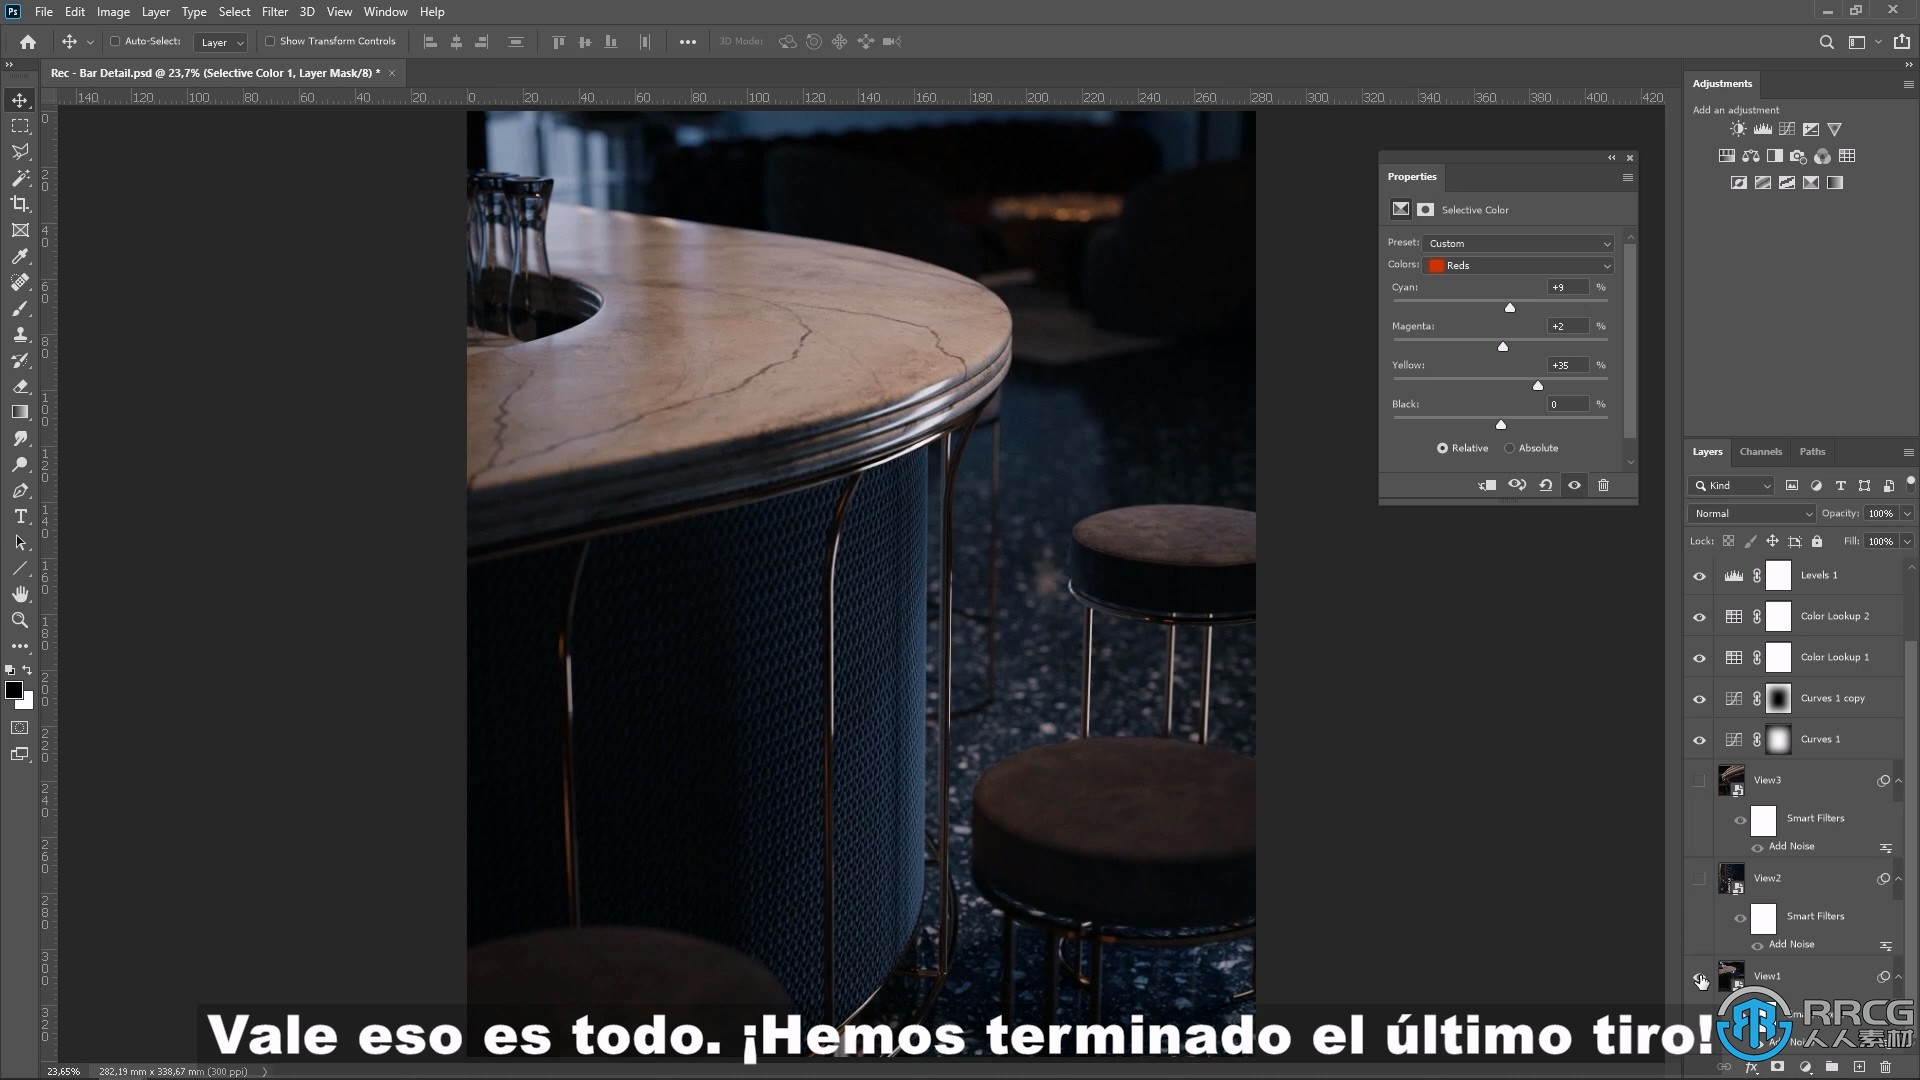 3dsmax与Corona高级室内可视化设计视频教程